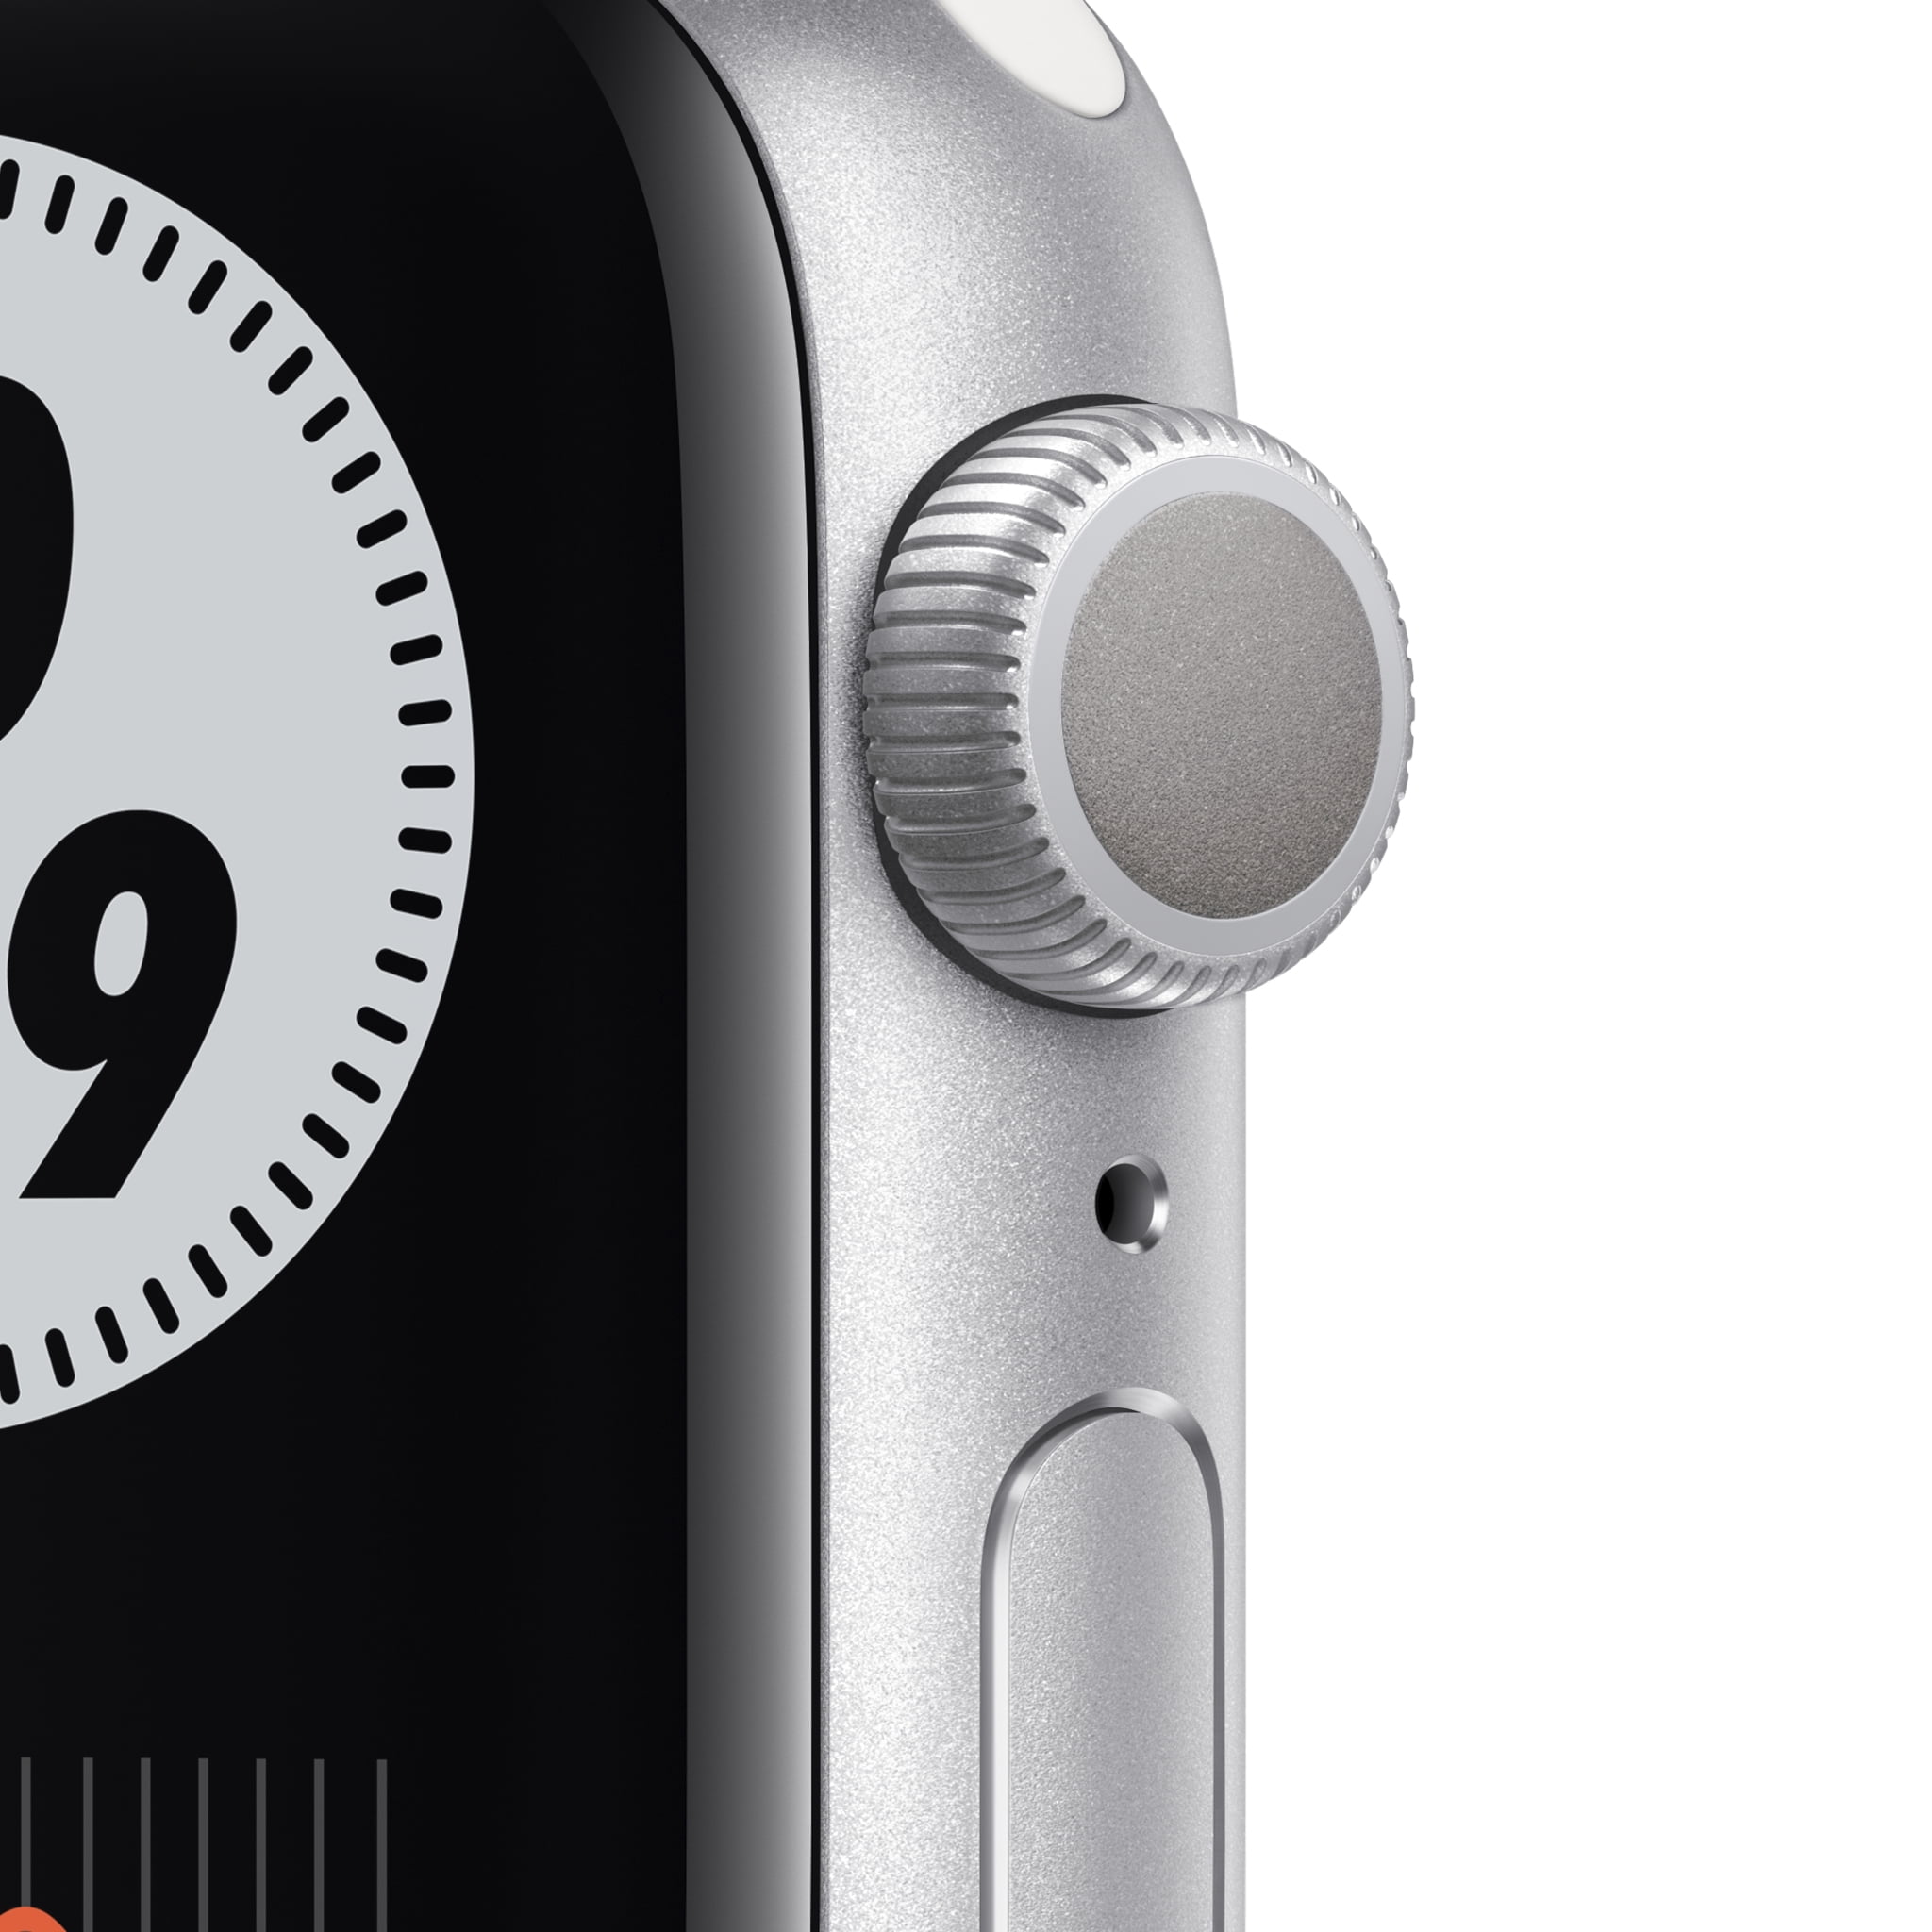 Apple Watch Series 6 NIKE 40mm 腕時計(デジタル) 時計 メンズ 売れ筋一番人気